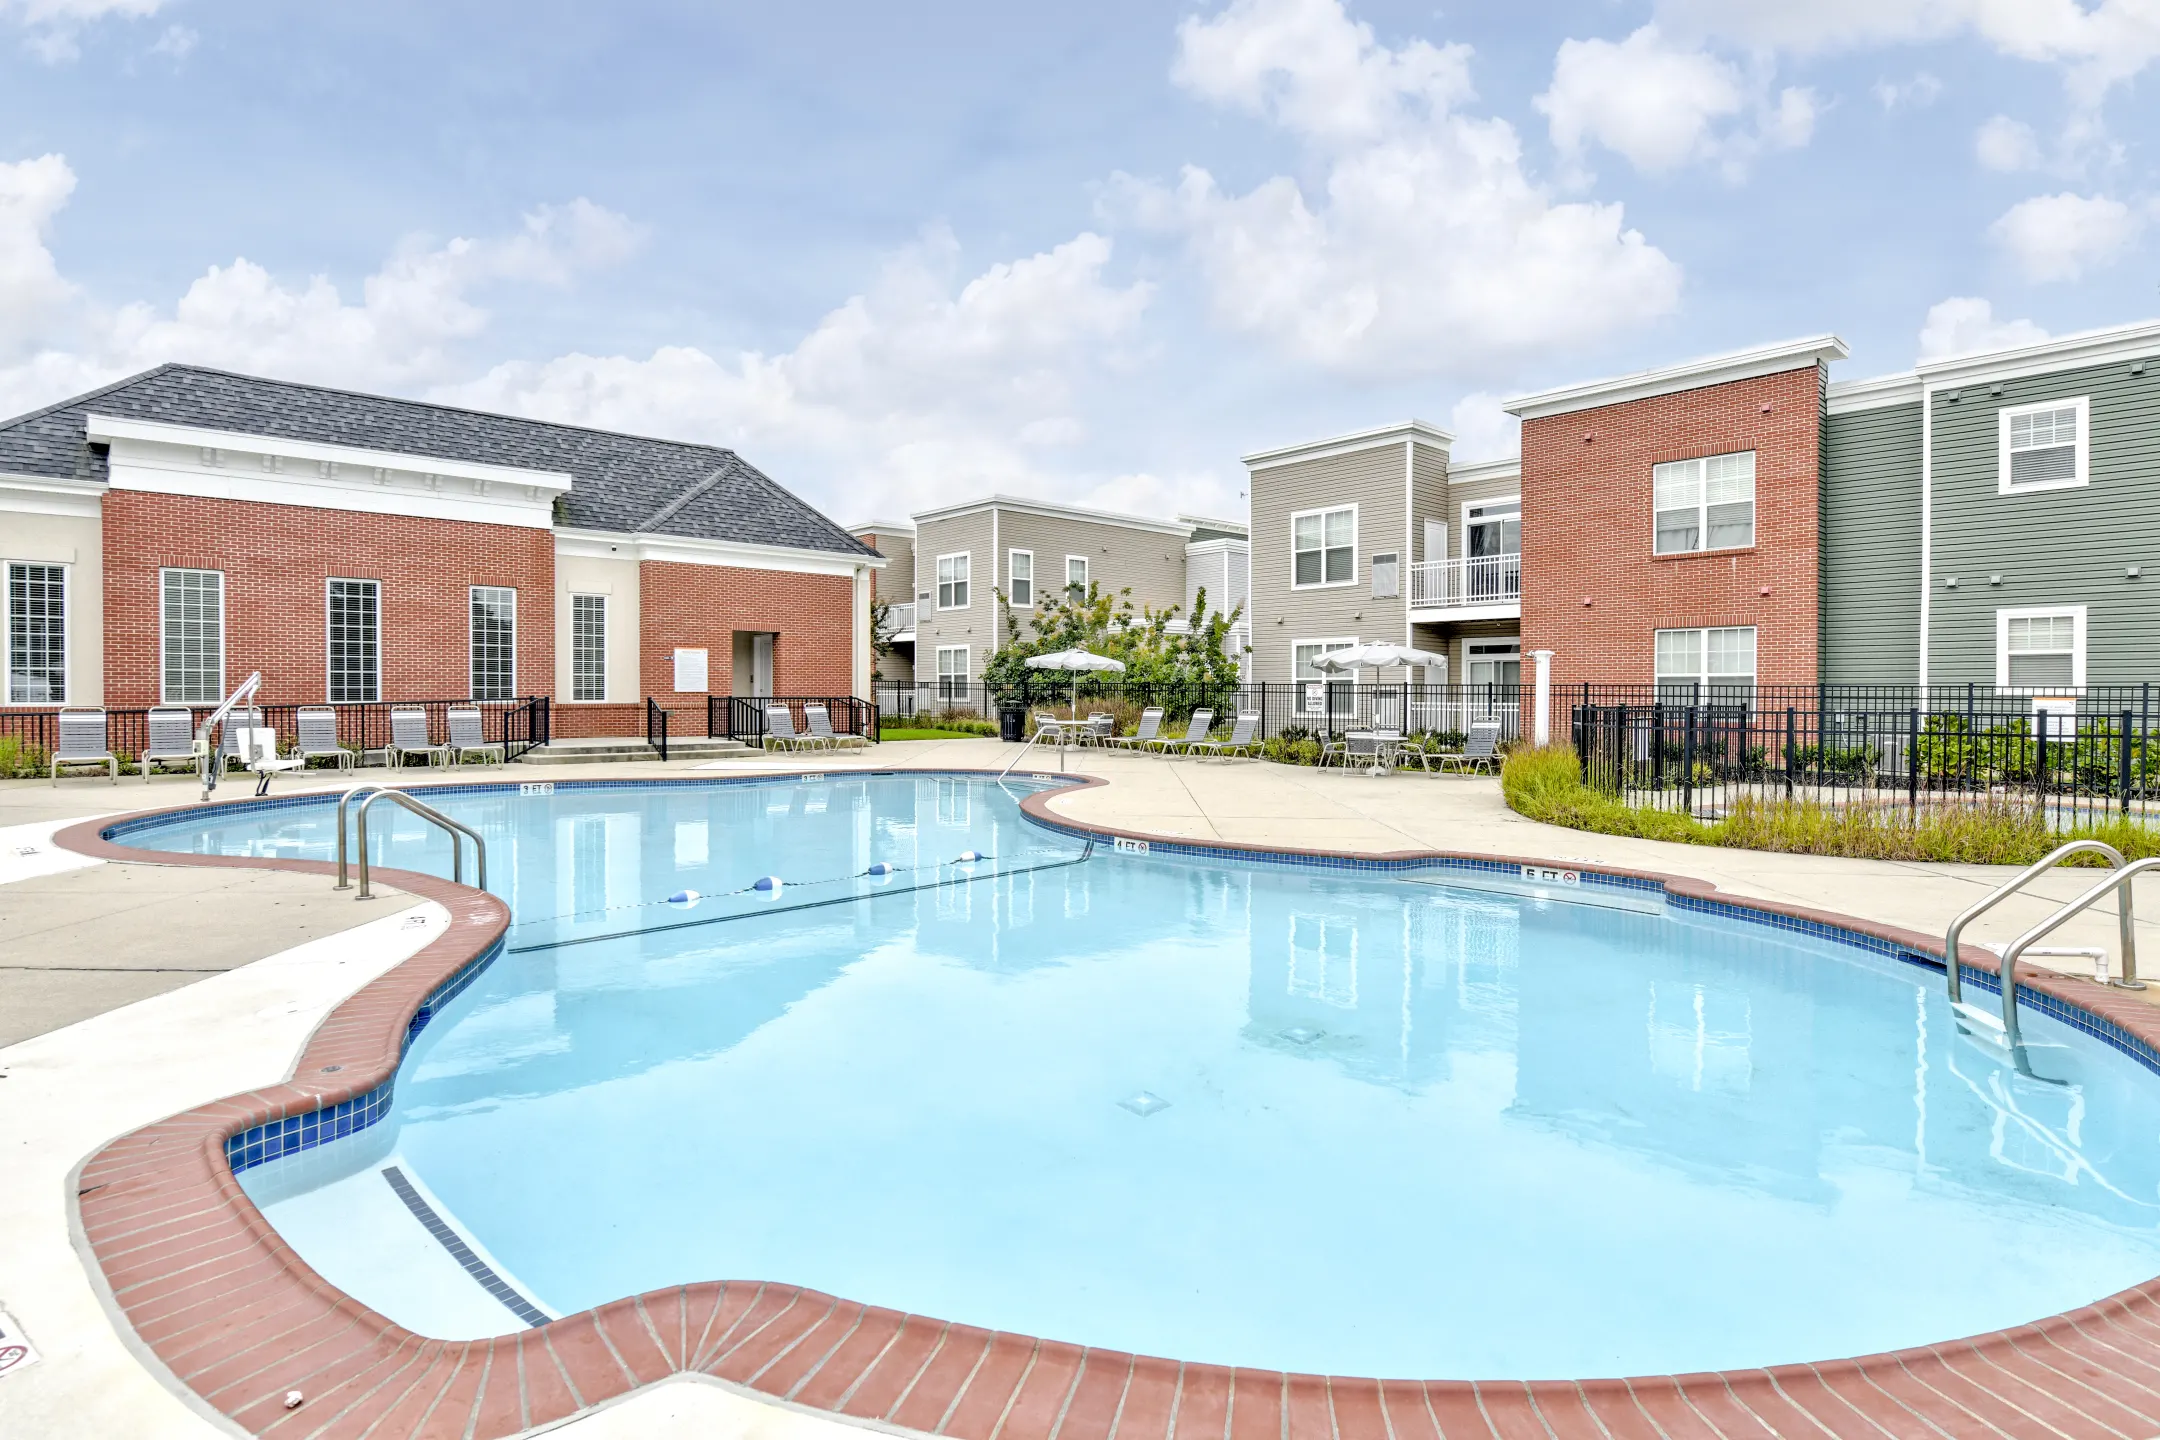 Pool - Dwell Luxury Apartments - Cherry Hill, NJ